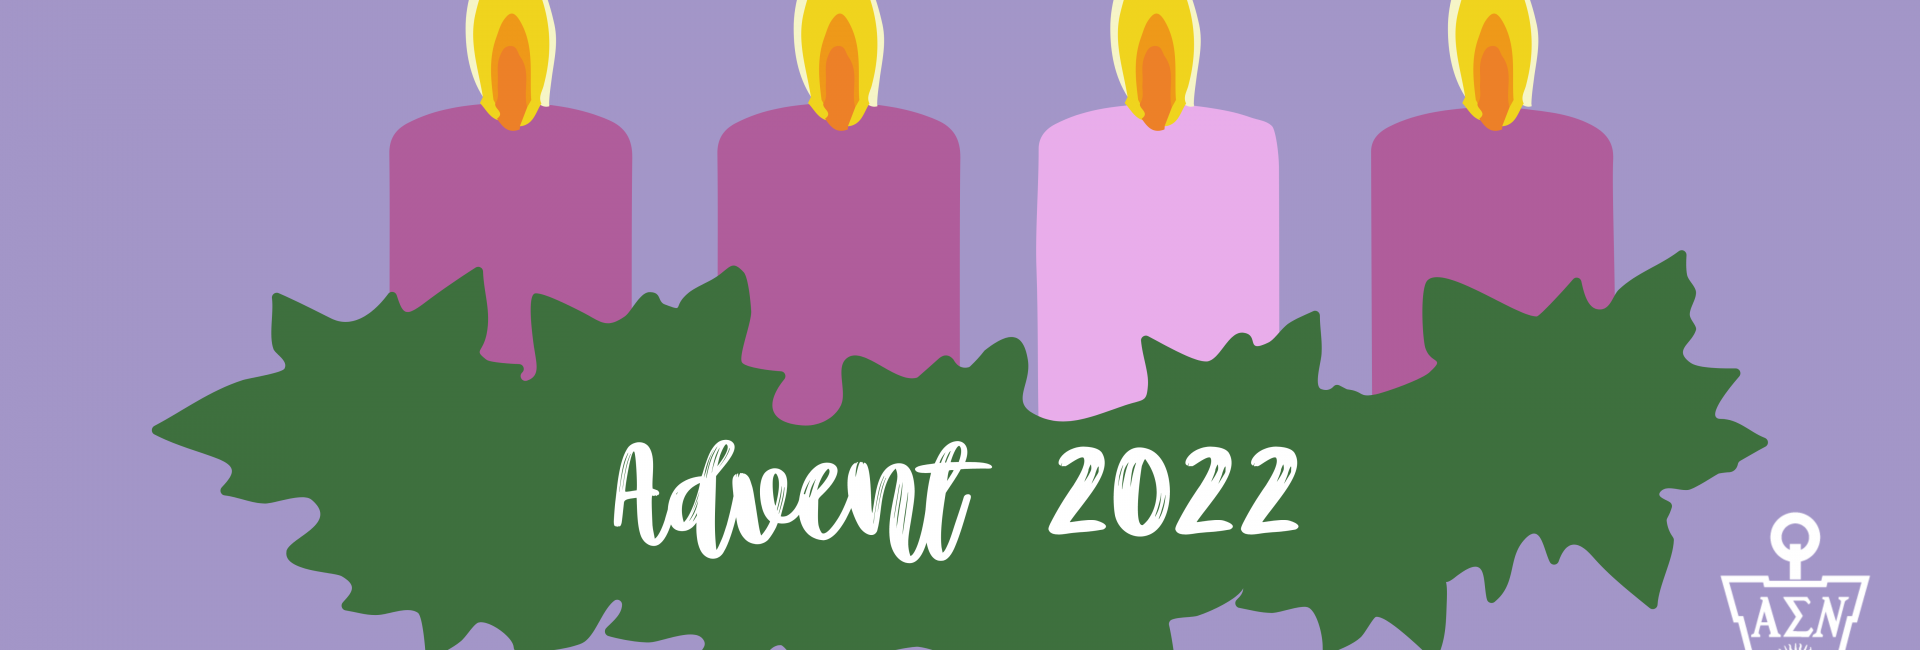 Advent 2022 Resources